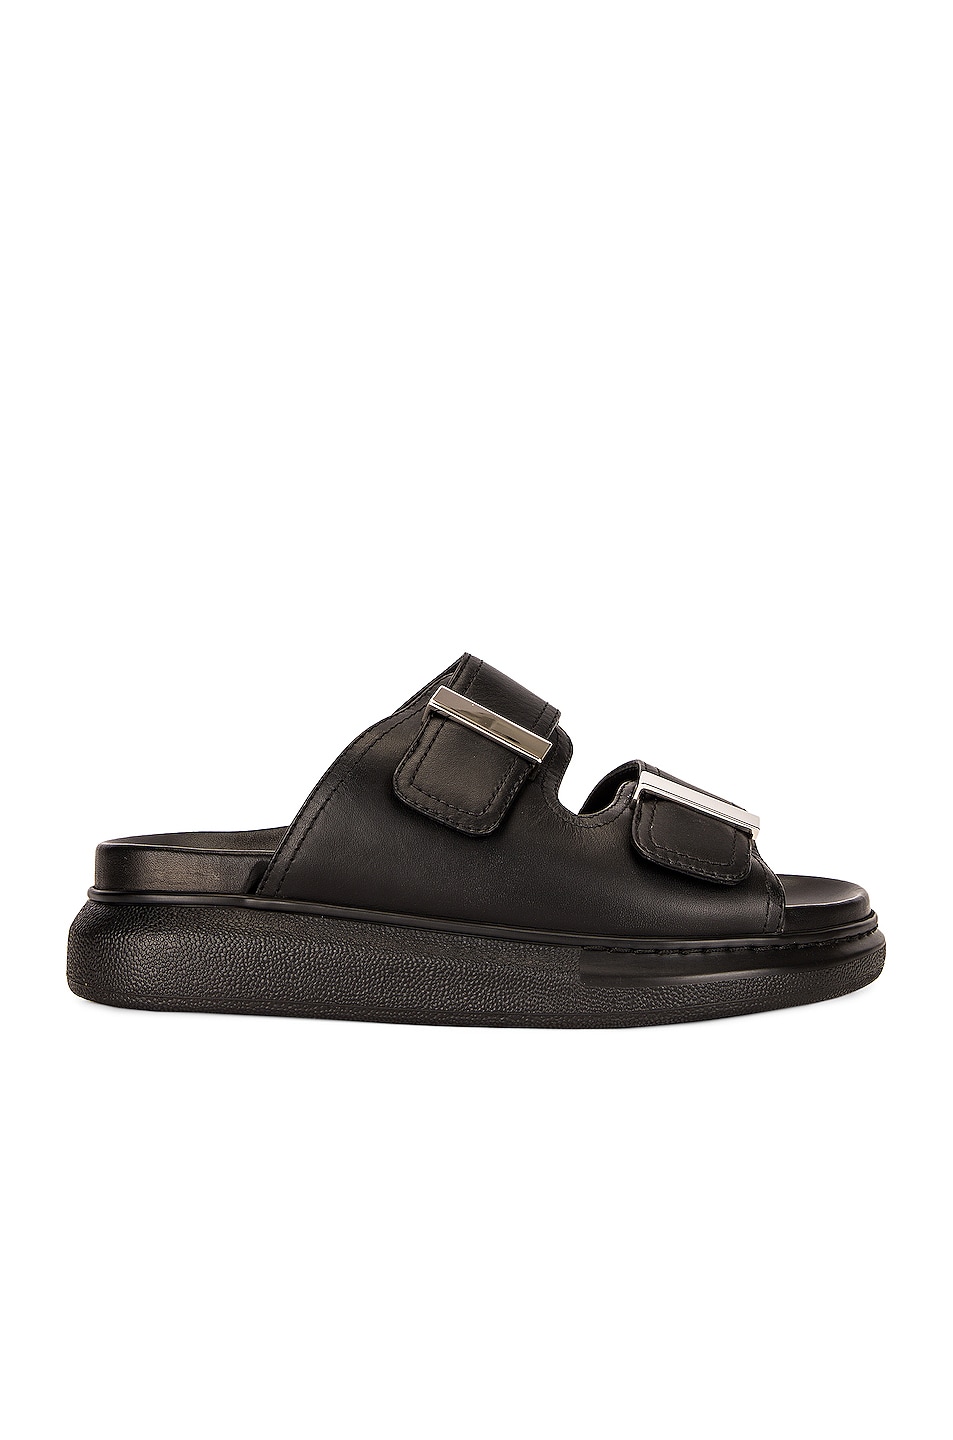 Alexander McQueen Leather Sandals in Black & Silver | FWRD